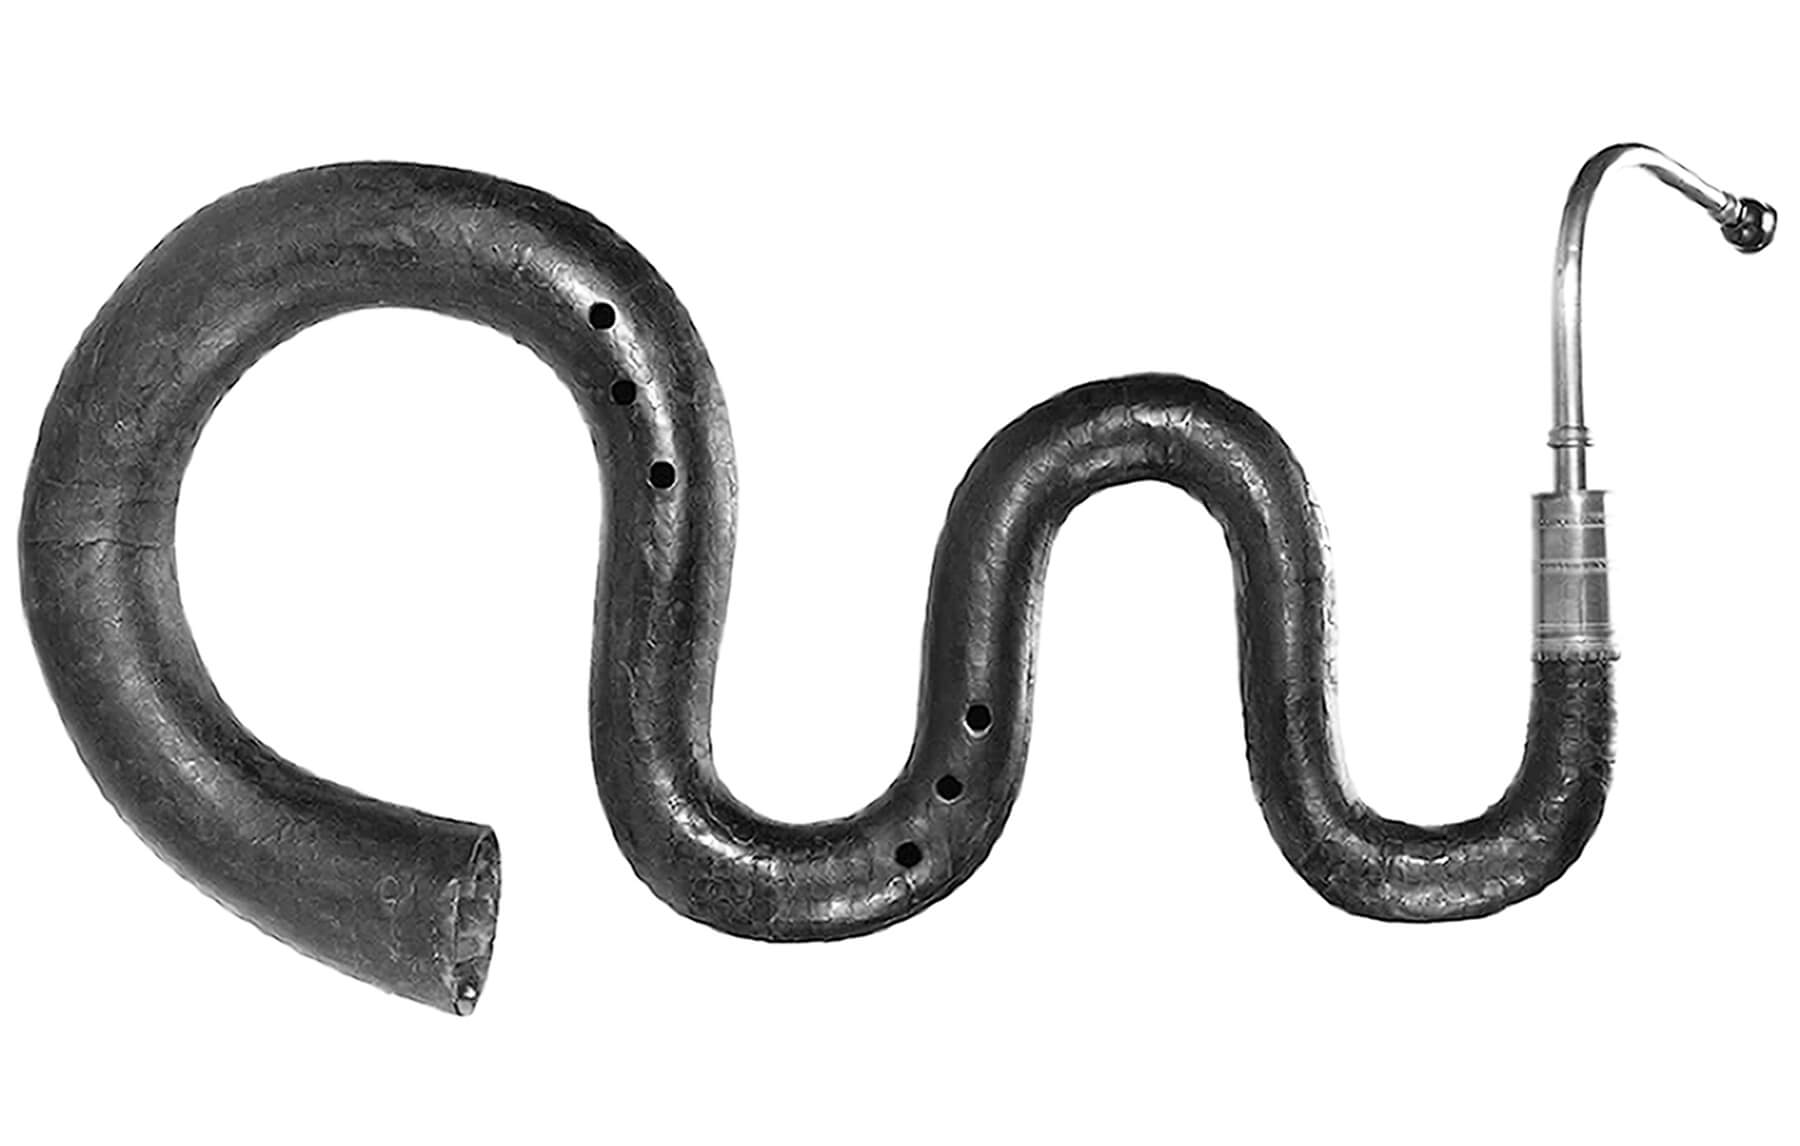 a curved brass instrument